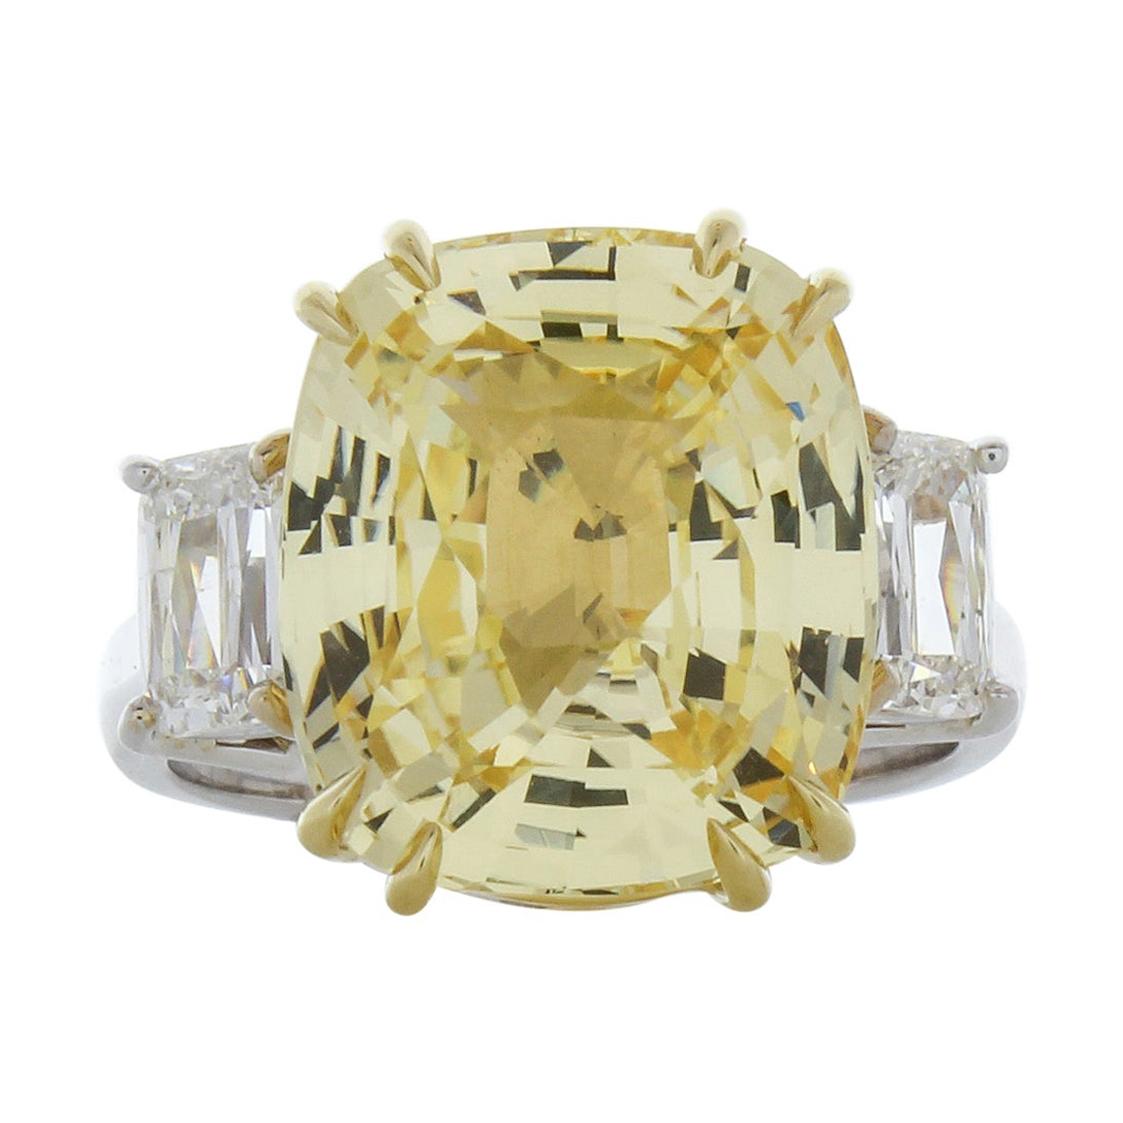 10.89 Carat Cushion Cut Yellow Sapphire & Diamond Ring in 18k Gold